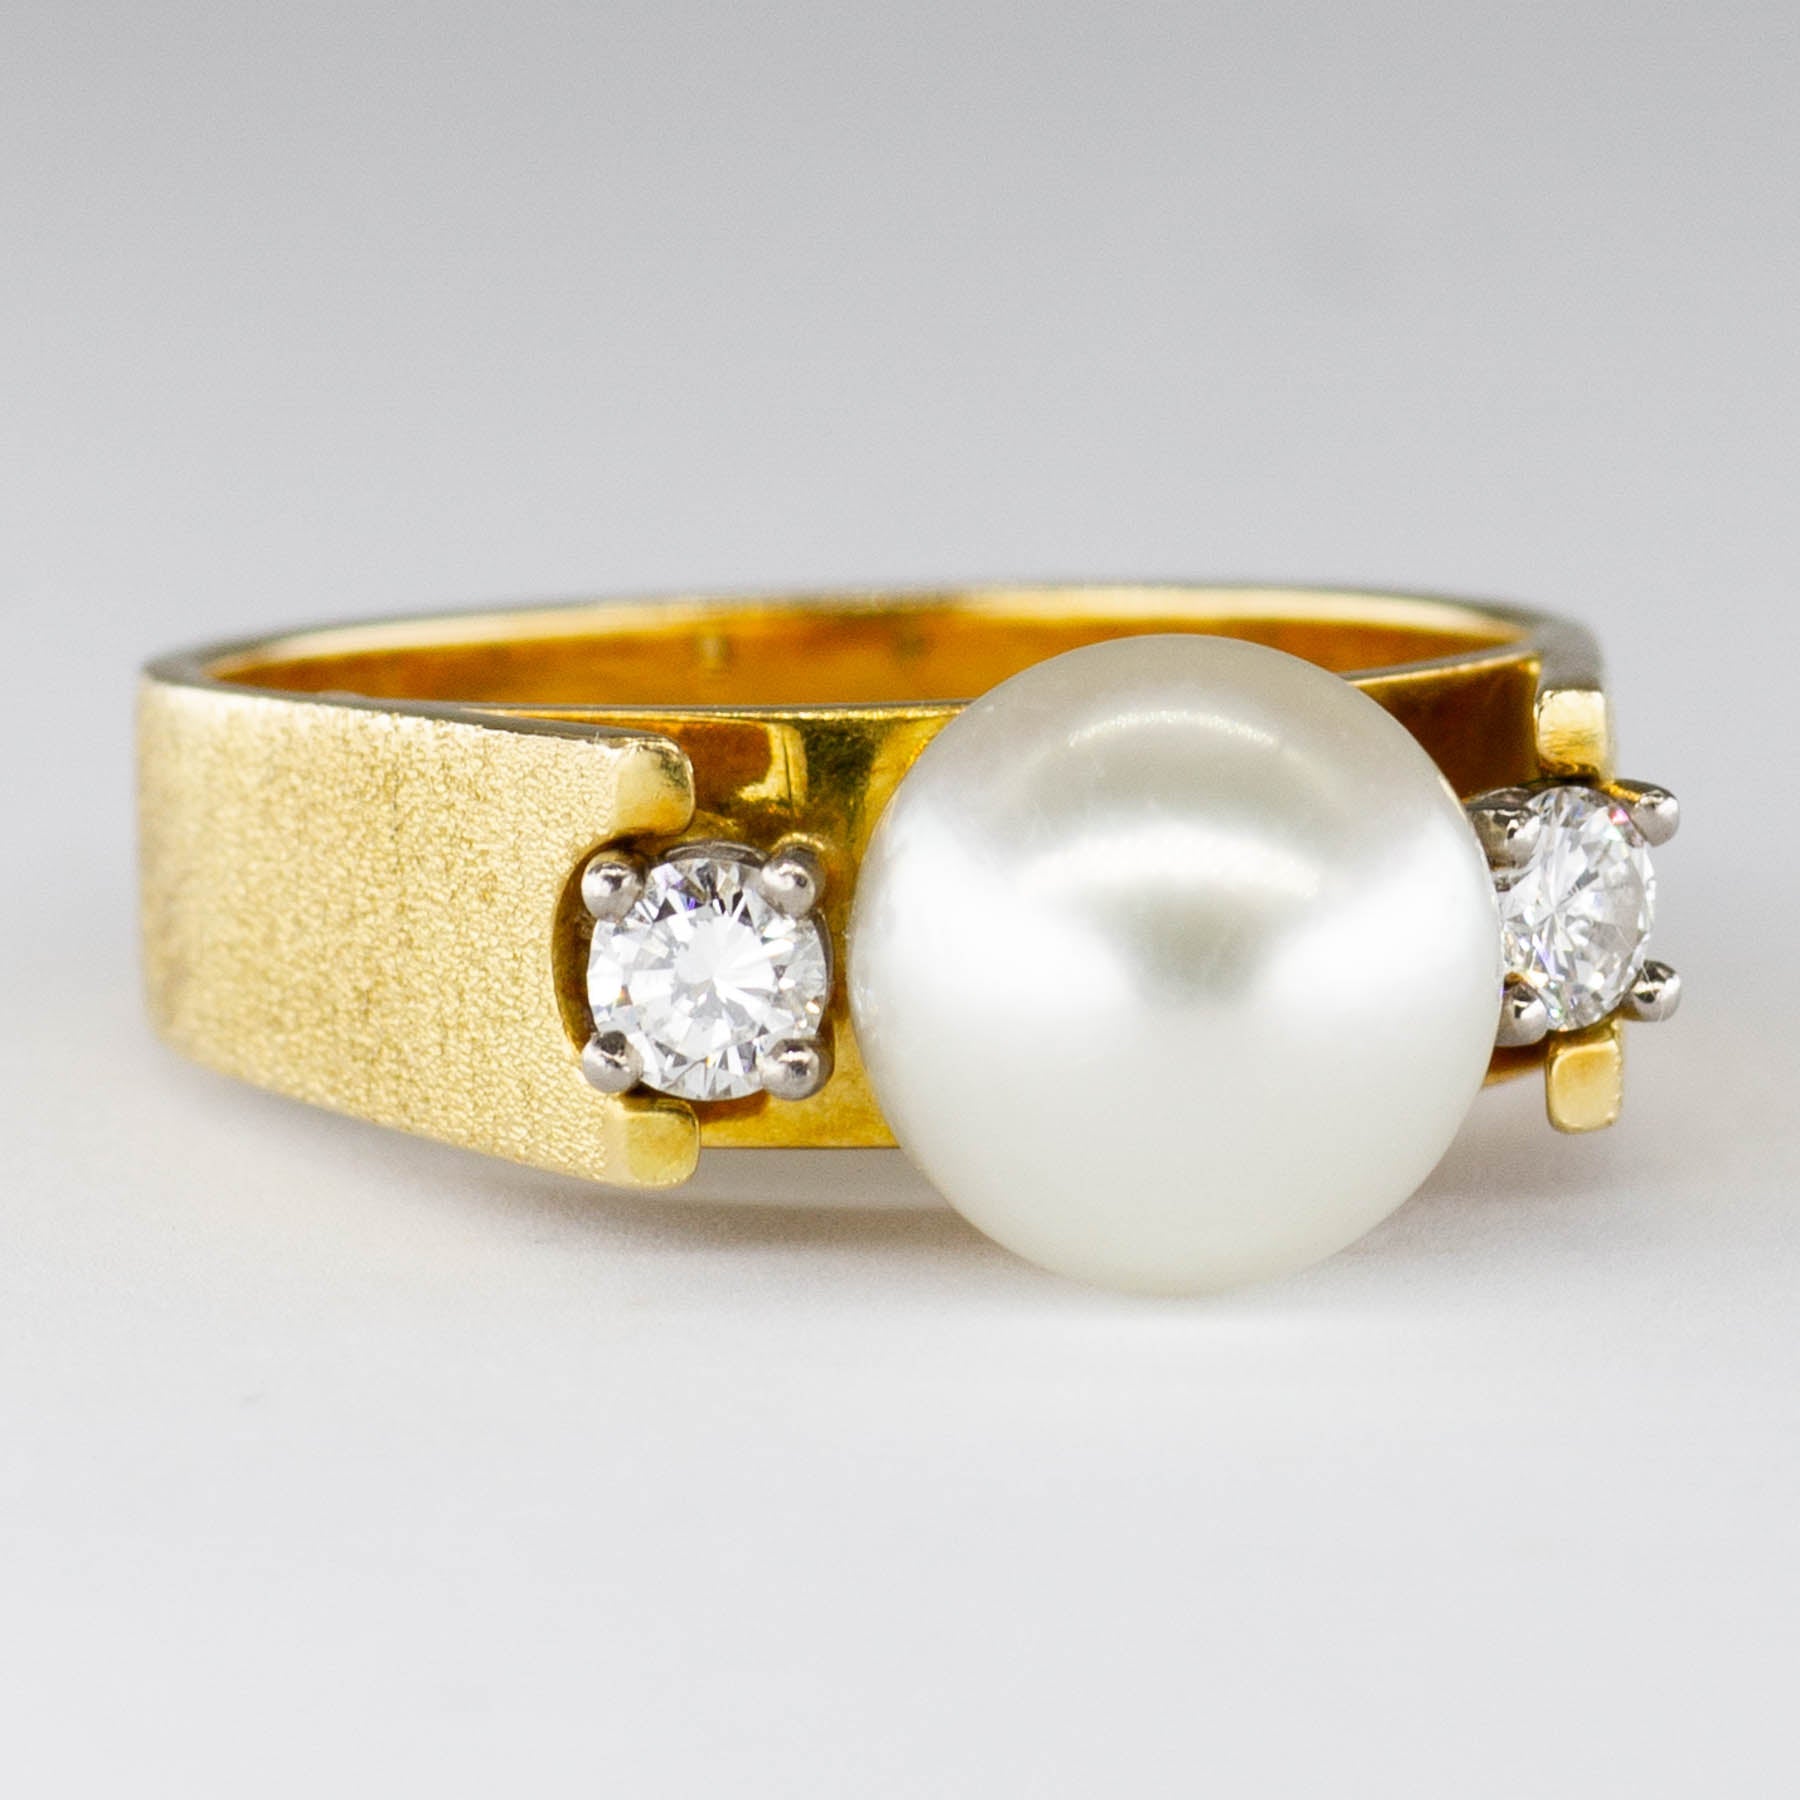 'Cavelti' Pearl and Diamond Ring | 0.20ctw | SZ 6.75 - 100 Ways